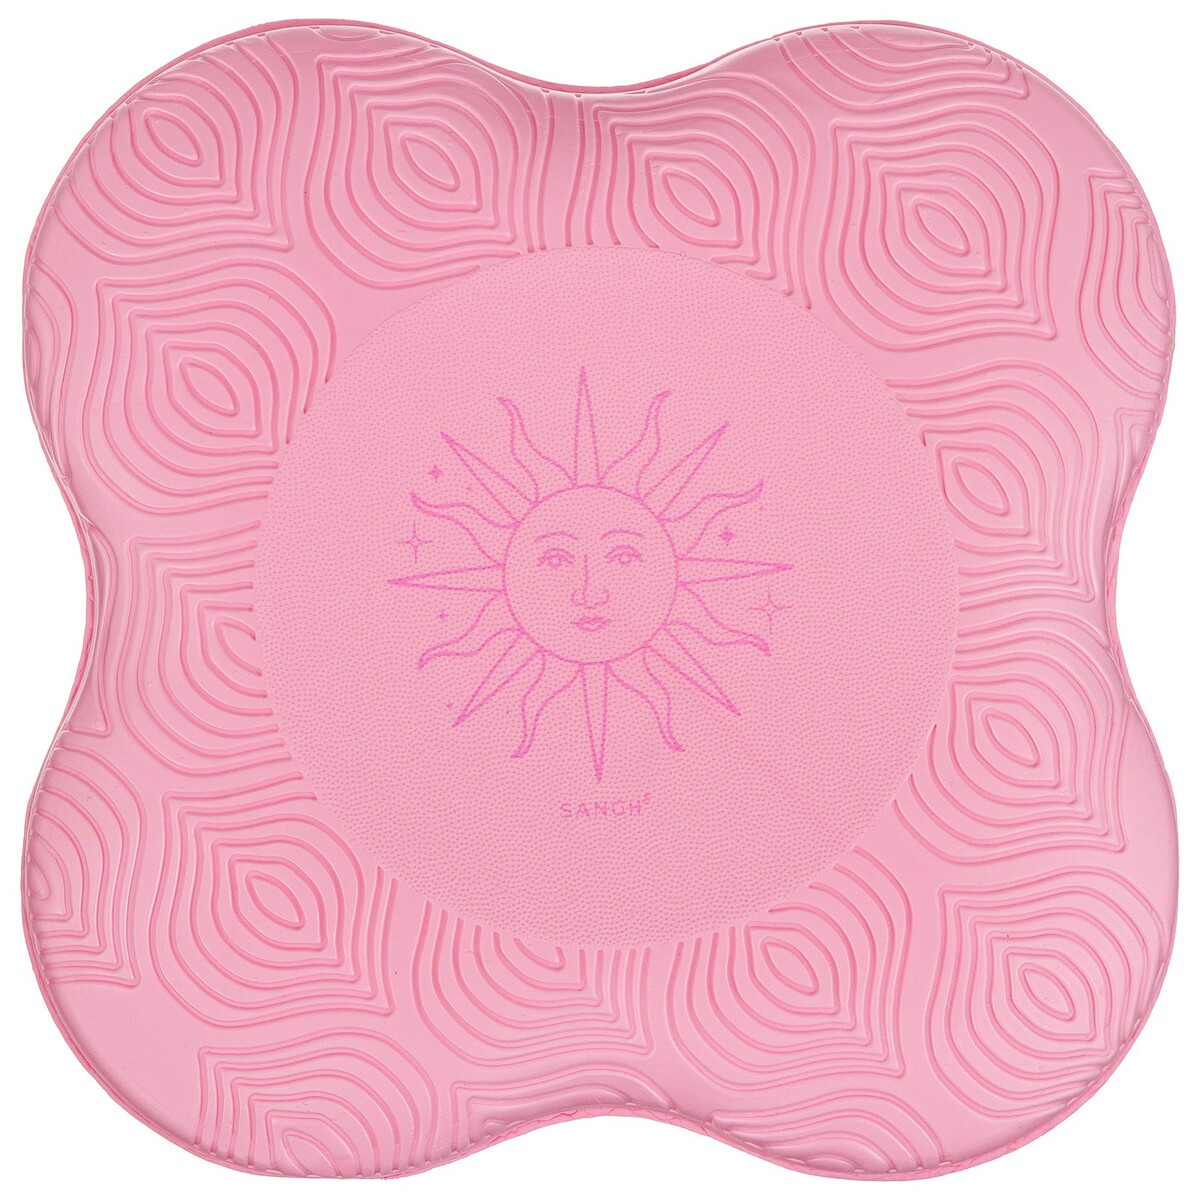 Коврик под колени для йоги sangh sun, 20х20 см, цвет розовый коврик гимнастический 173x61x0 6см body form bf ym02 розовый